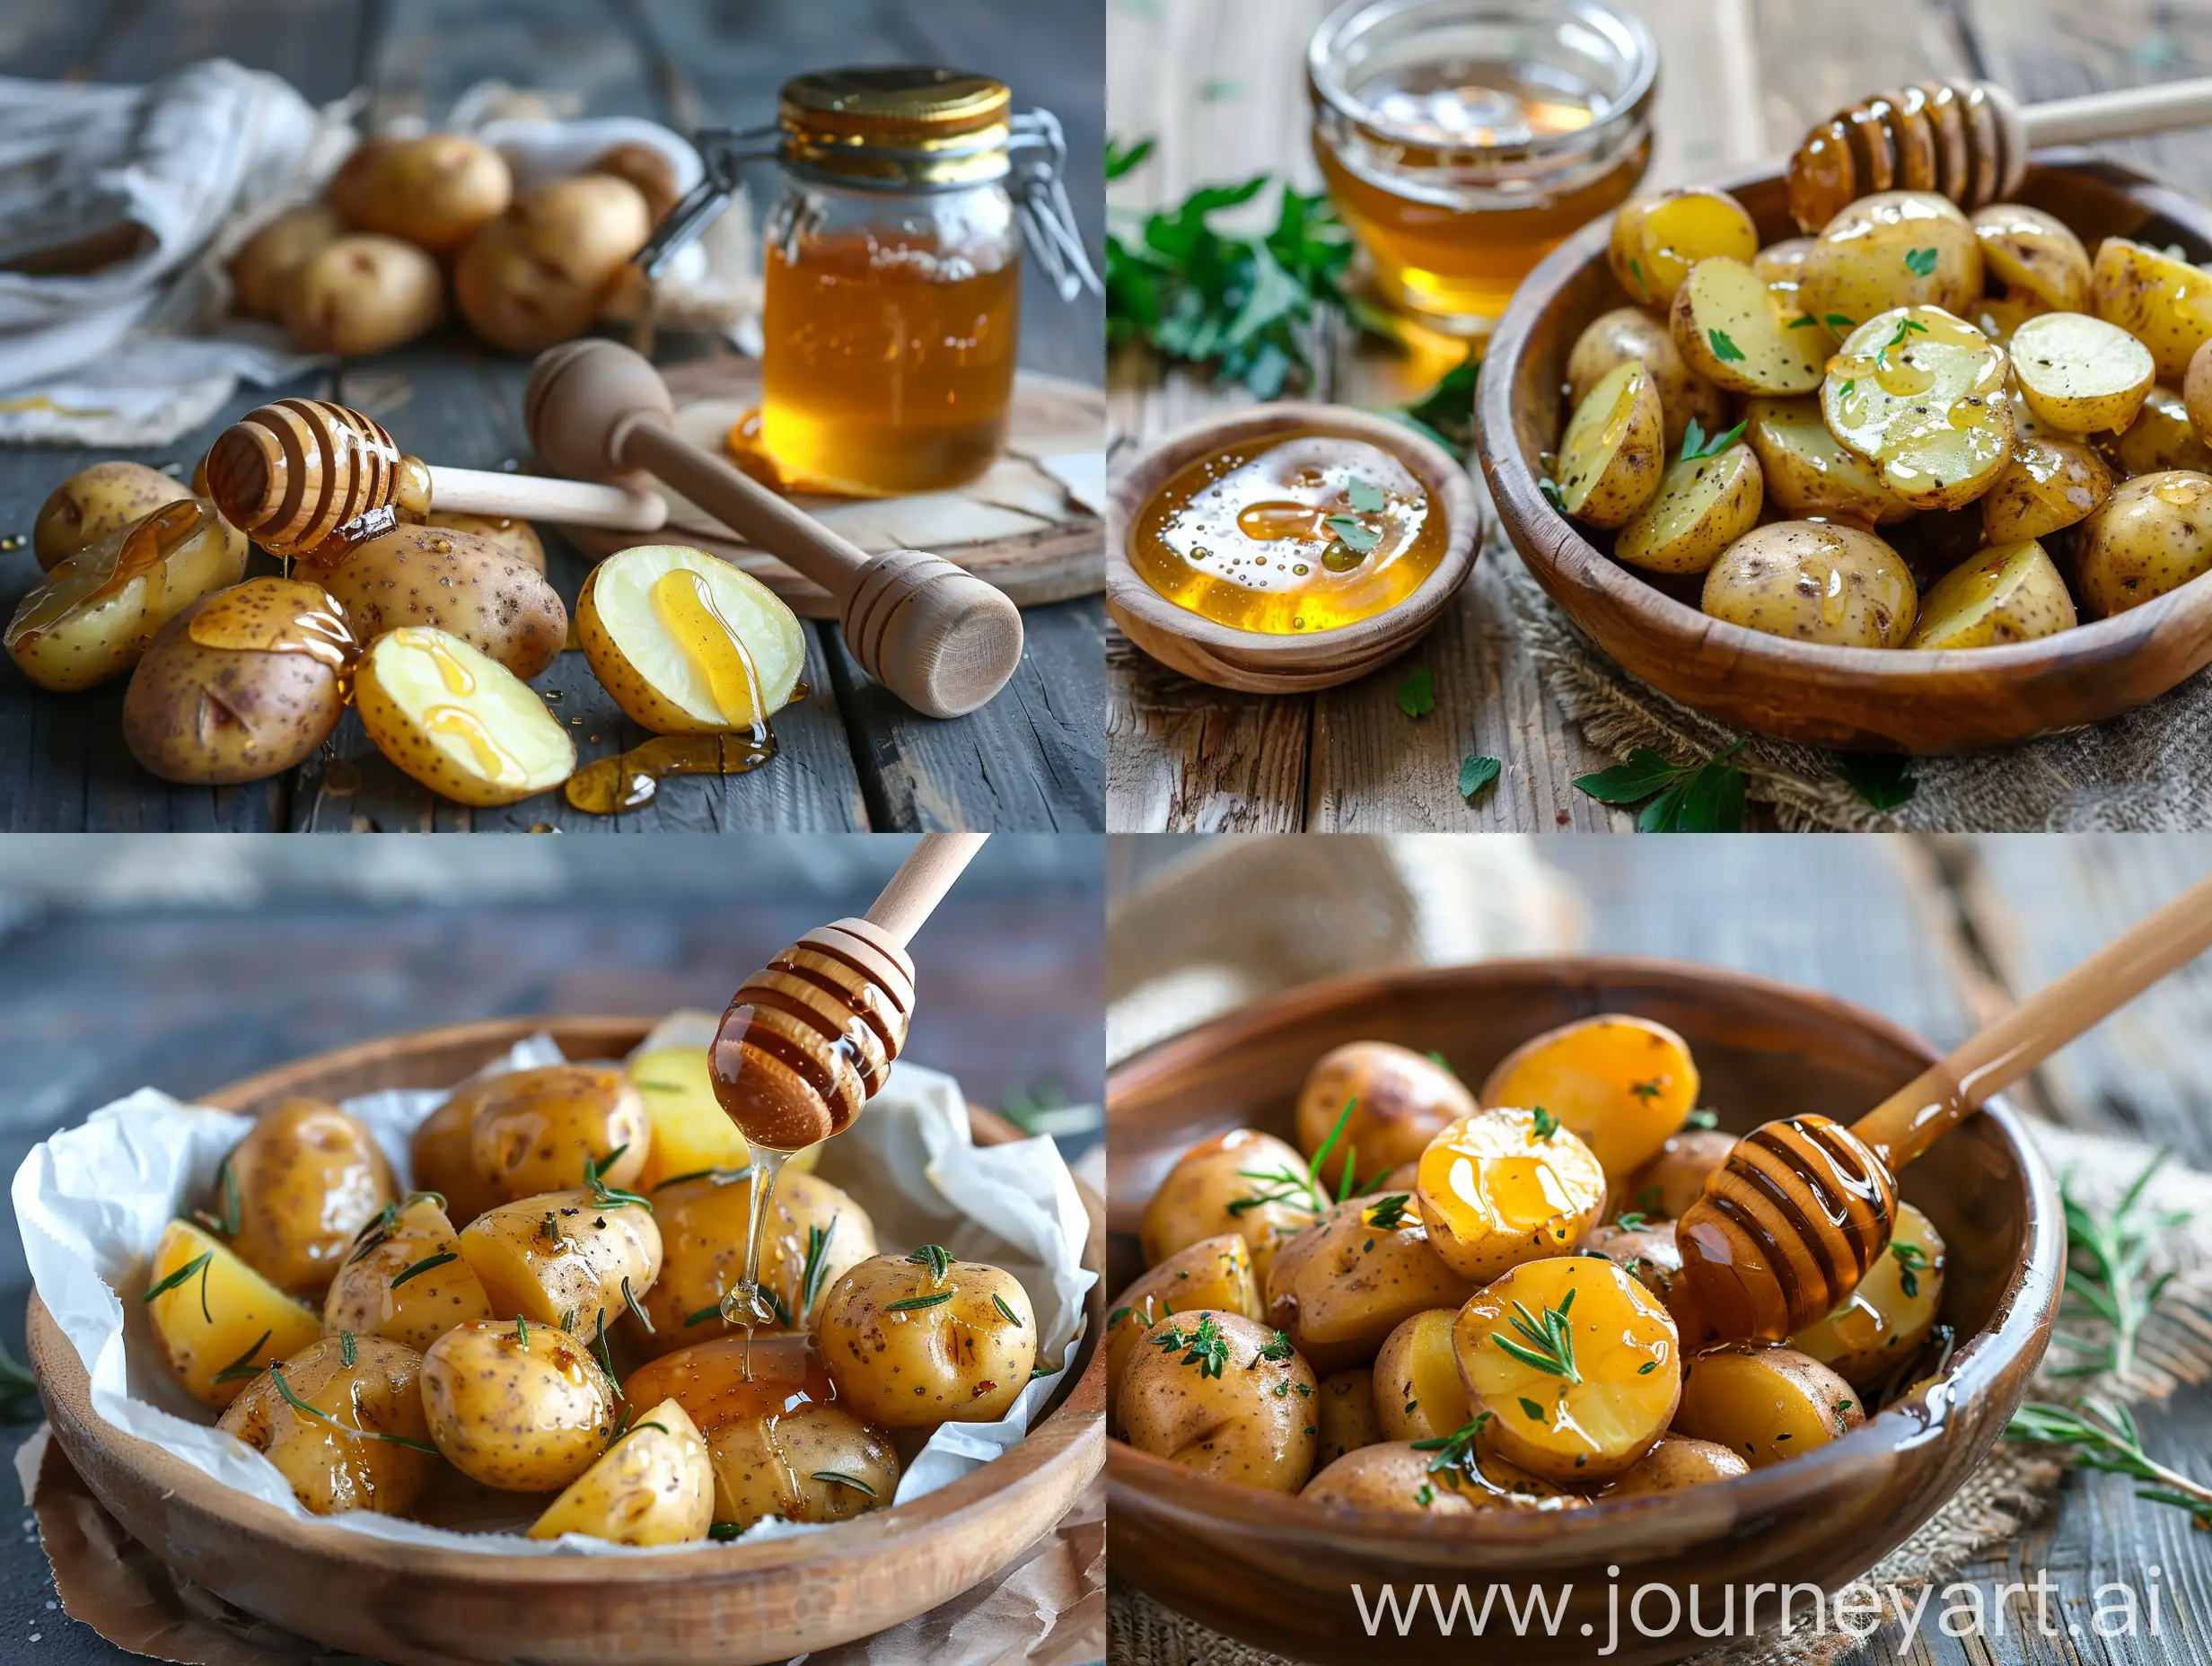 Delicious-HoneyGlazed-Potatoes-Tempting-Culinary-Delight